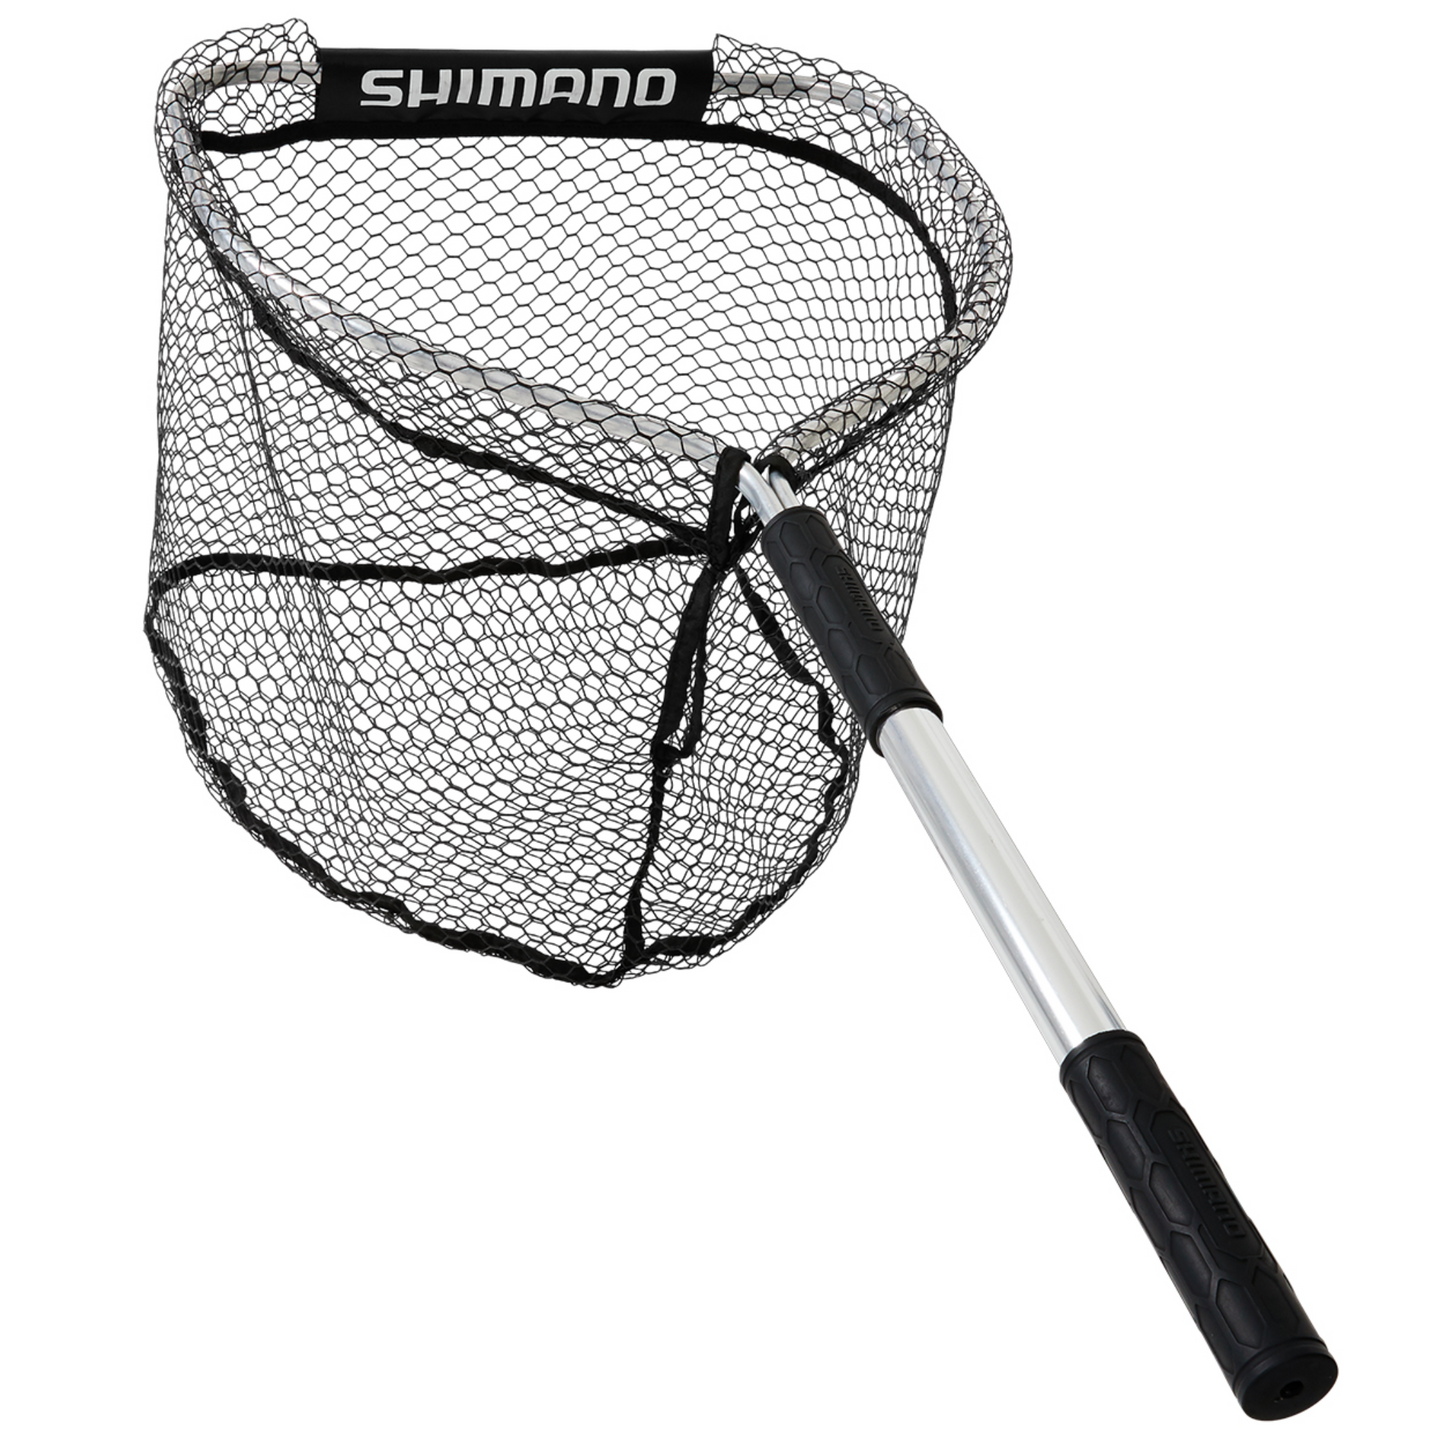 Shimano Wide Mesh Net (Lifestyle Gear)